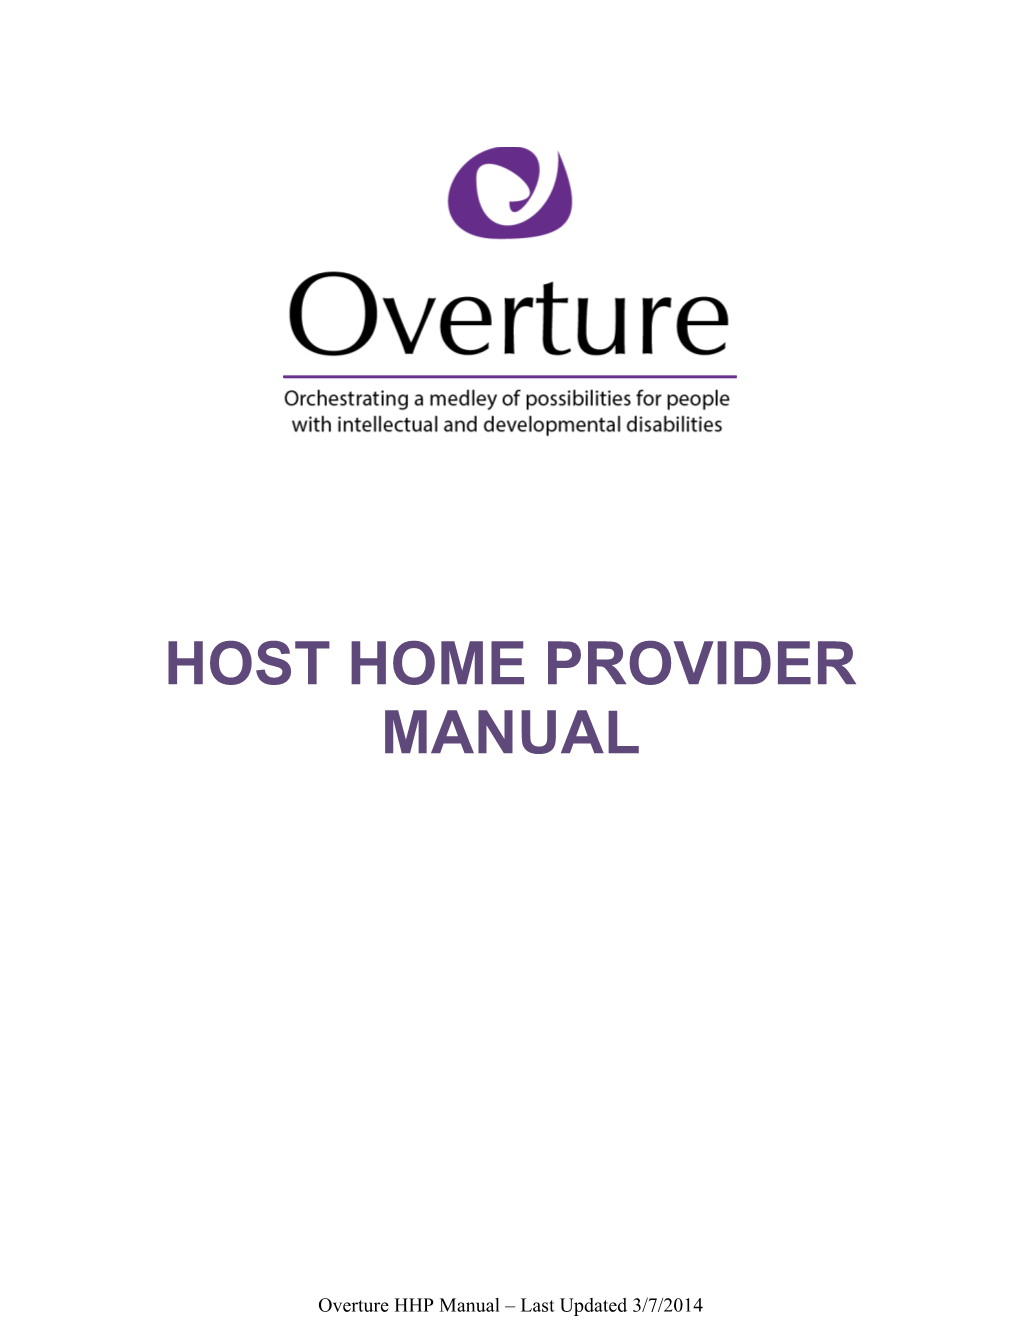 Host Home Provider Manual